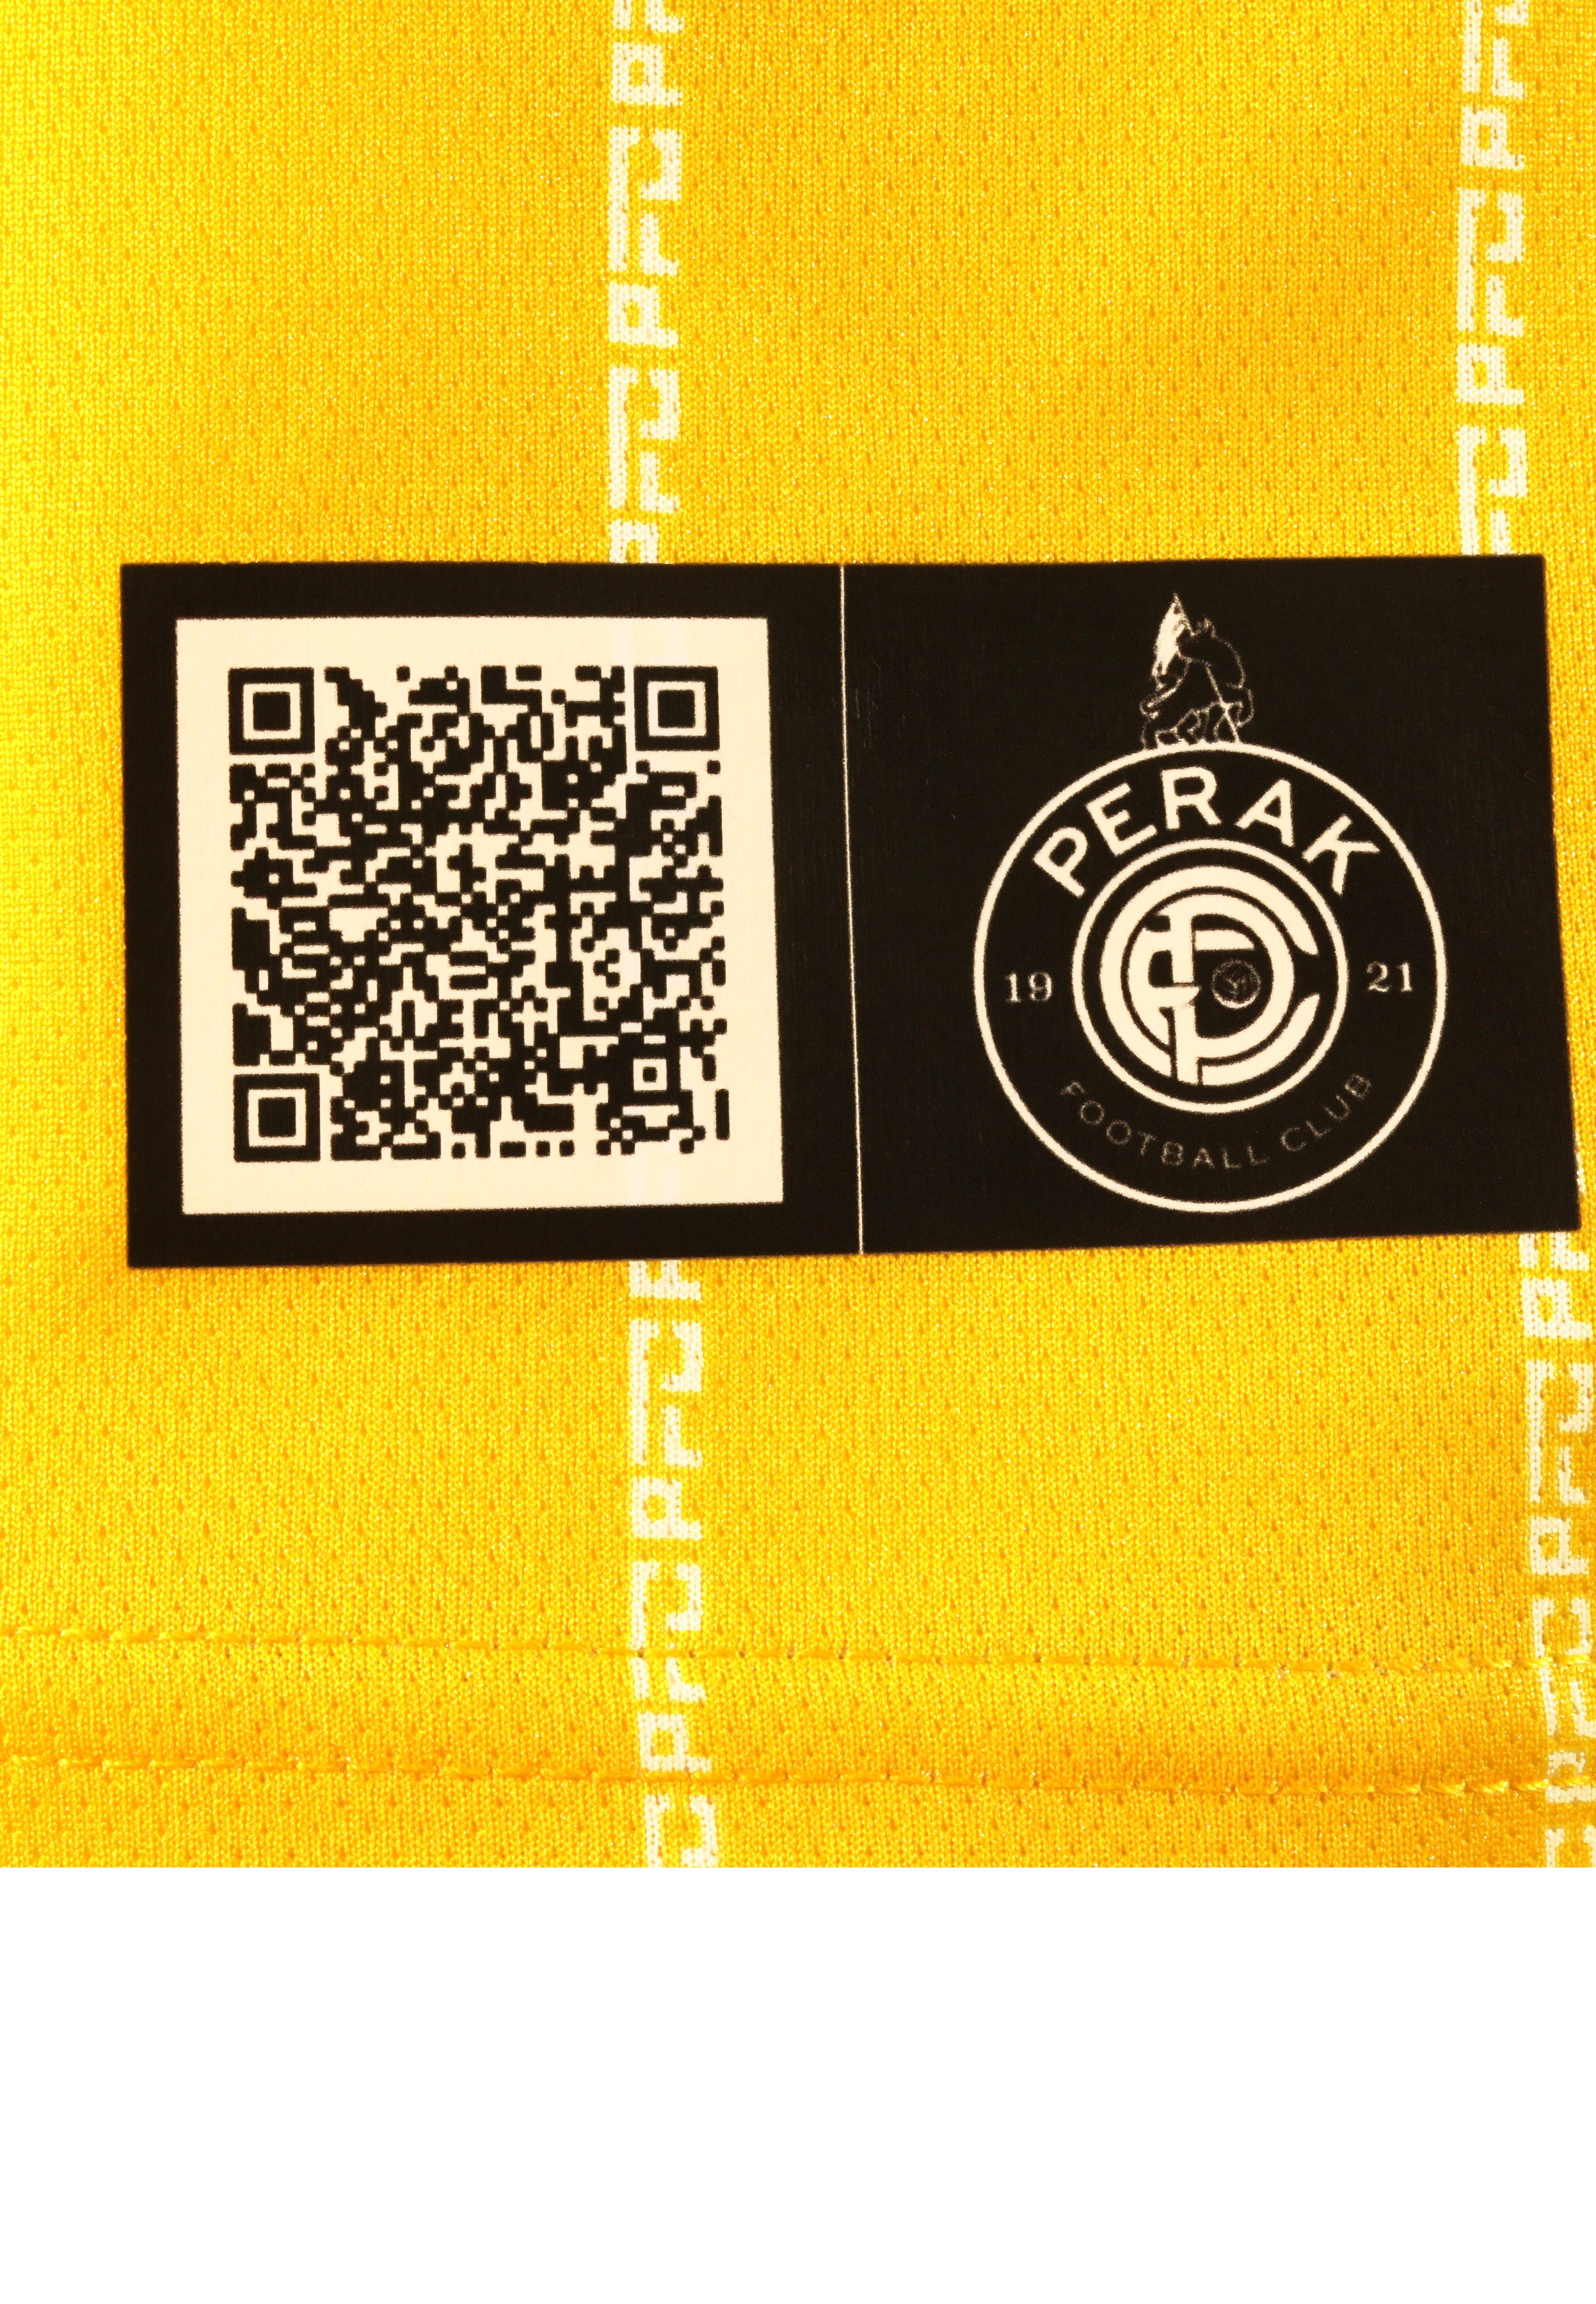 Perak FC Replica Home Jersey Short Sleeve 2024/25 - PFCM-88030